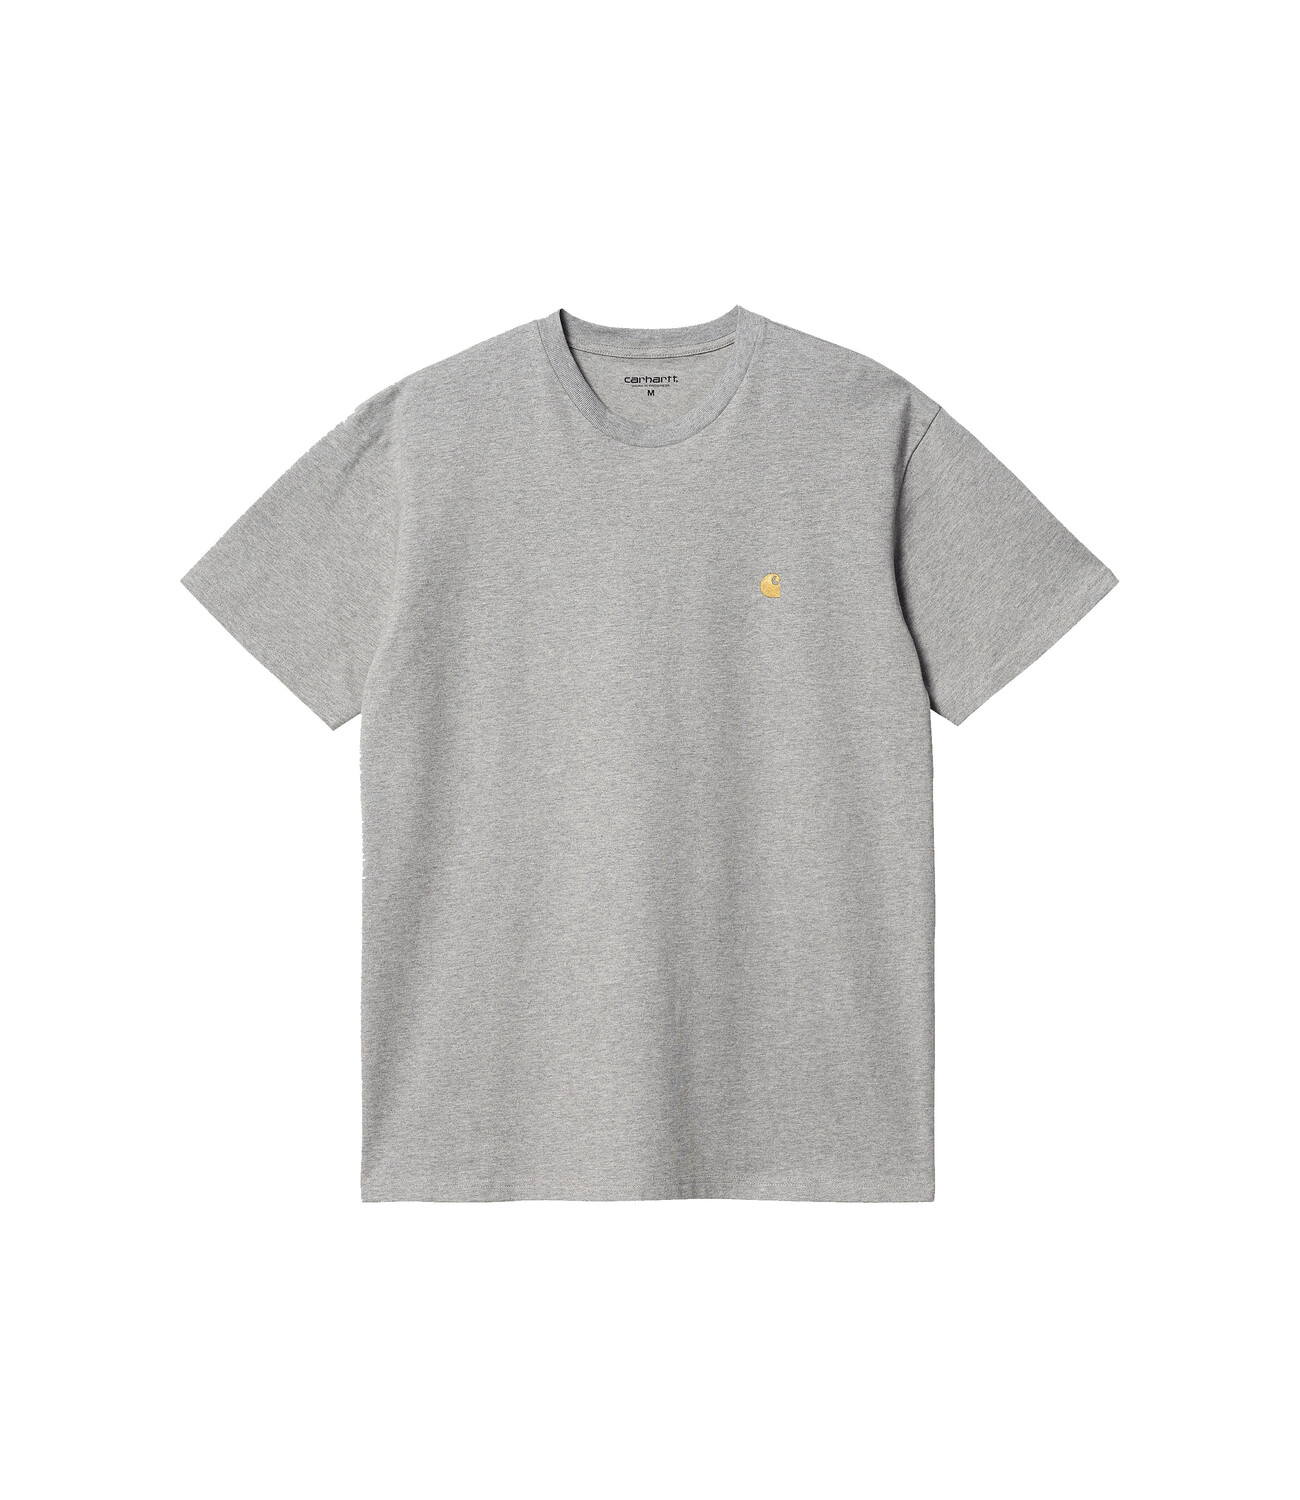 Chase T-shirt - Grey Heather